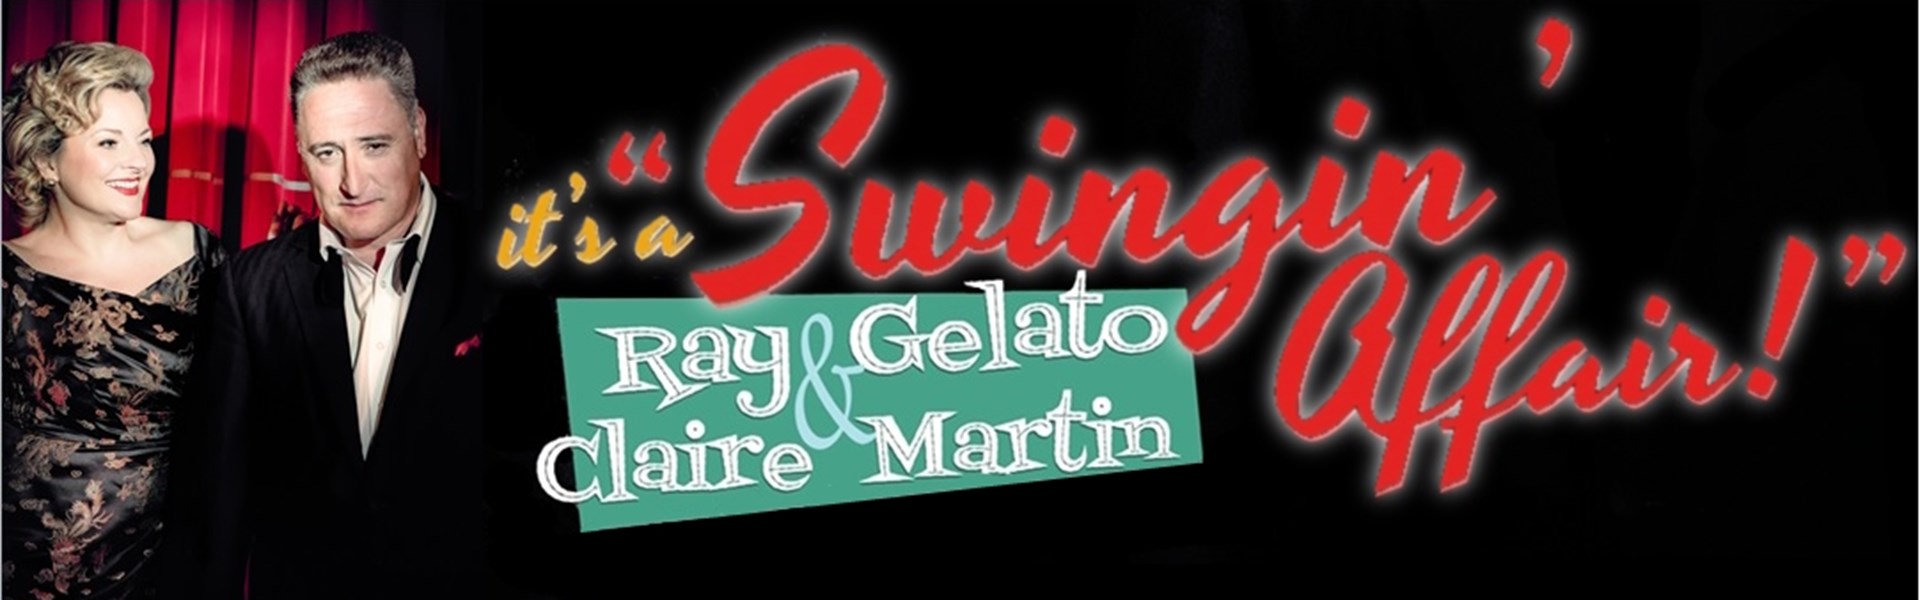 Claire Martin & Ray Gelato's 'A Swinging Affair'